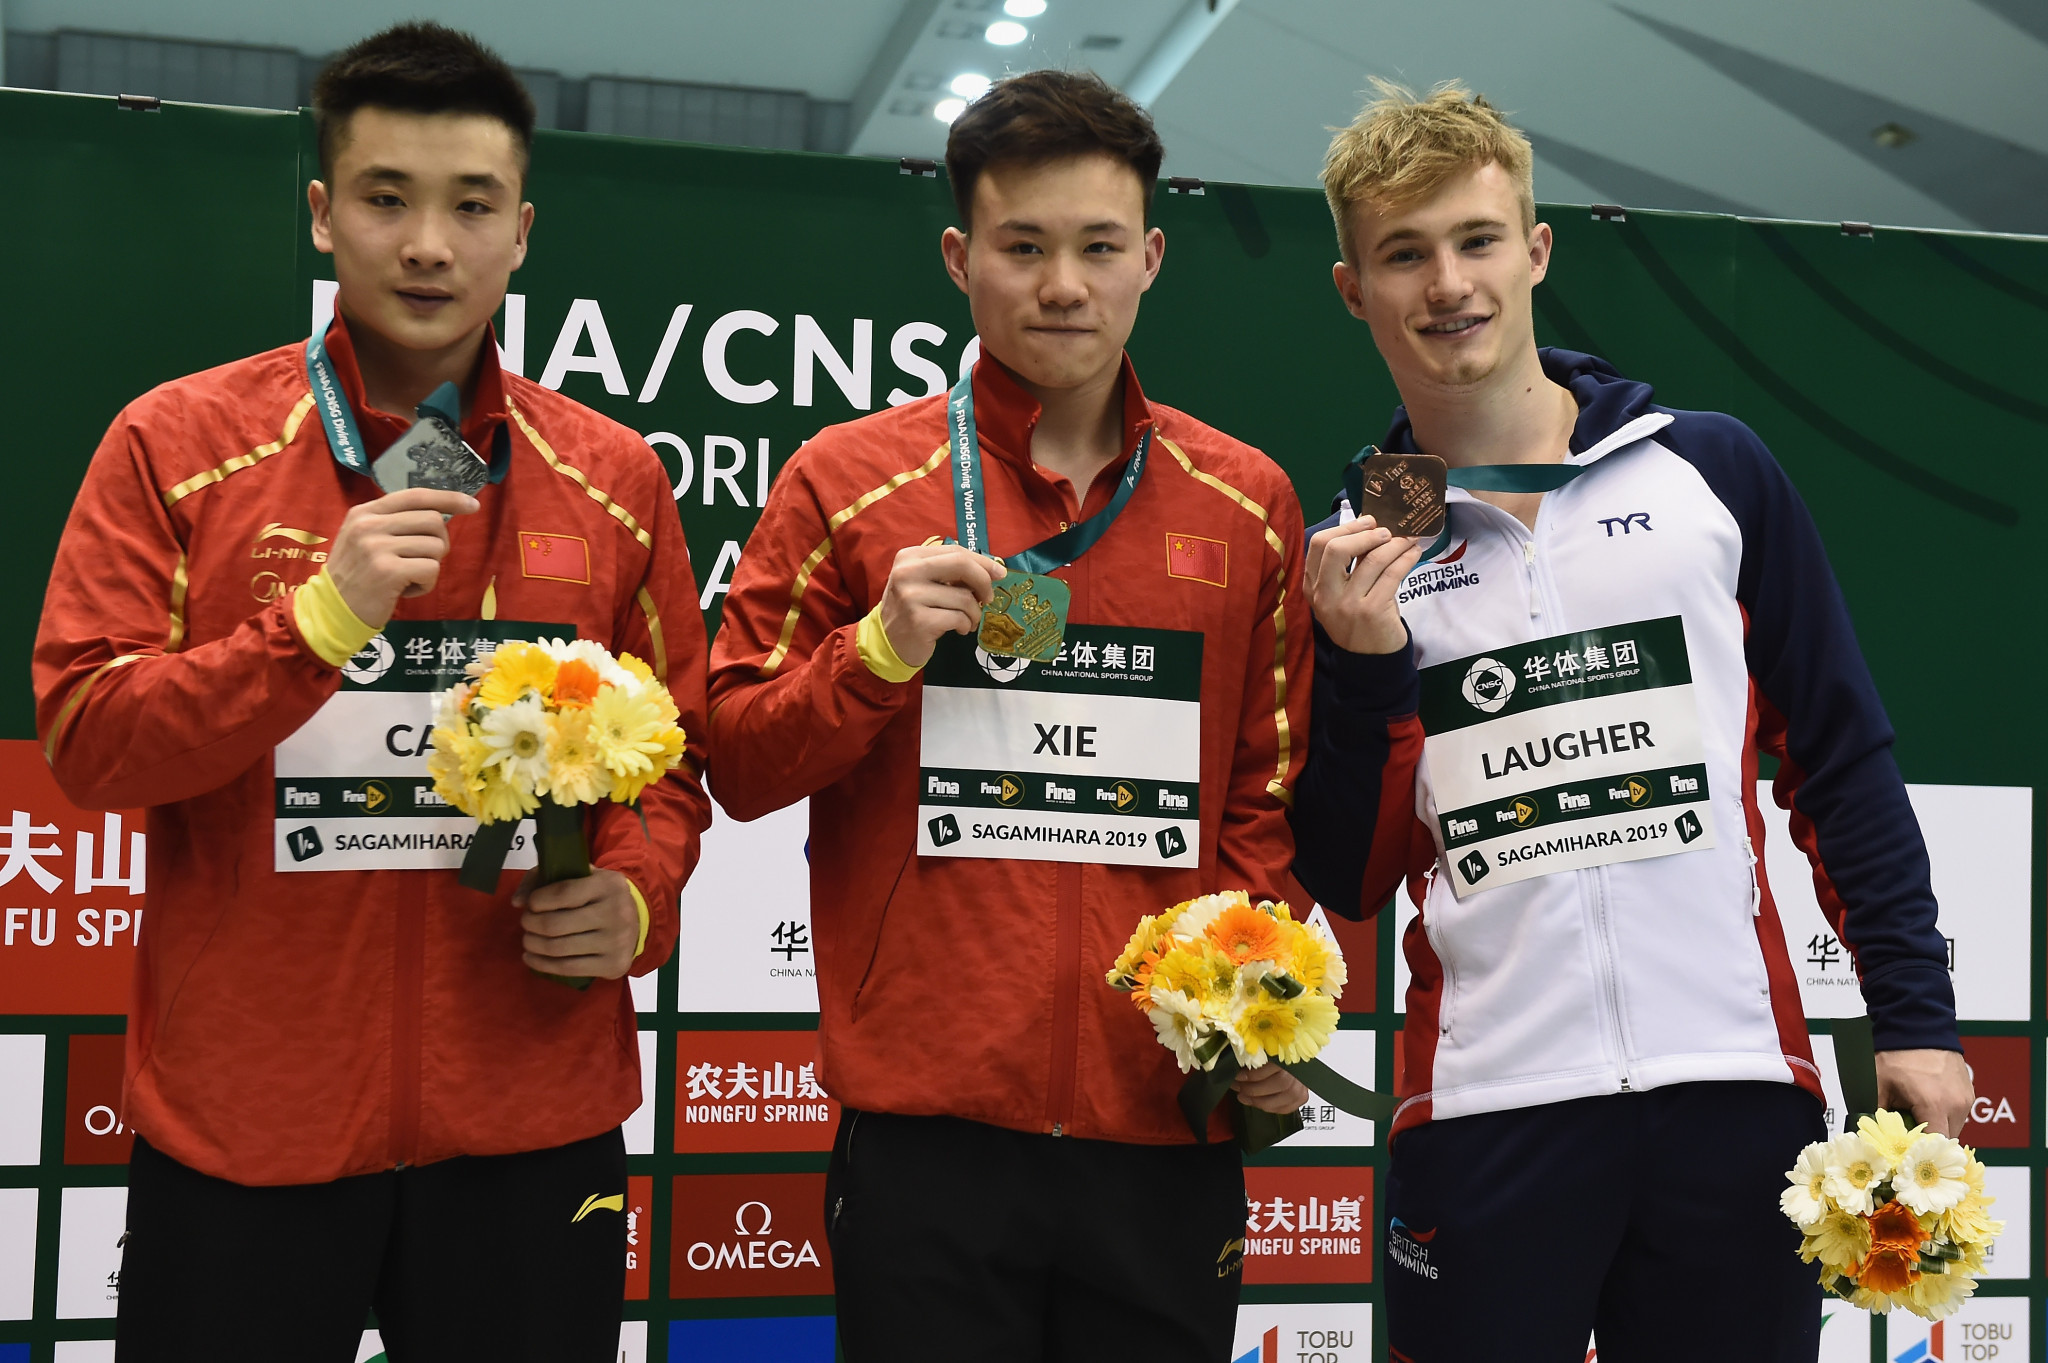  Three more golds for China at FINA Diving World Series opener in Sagimihara